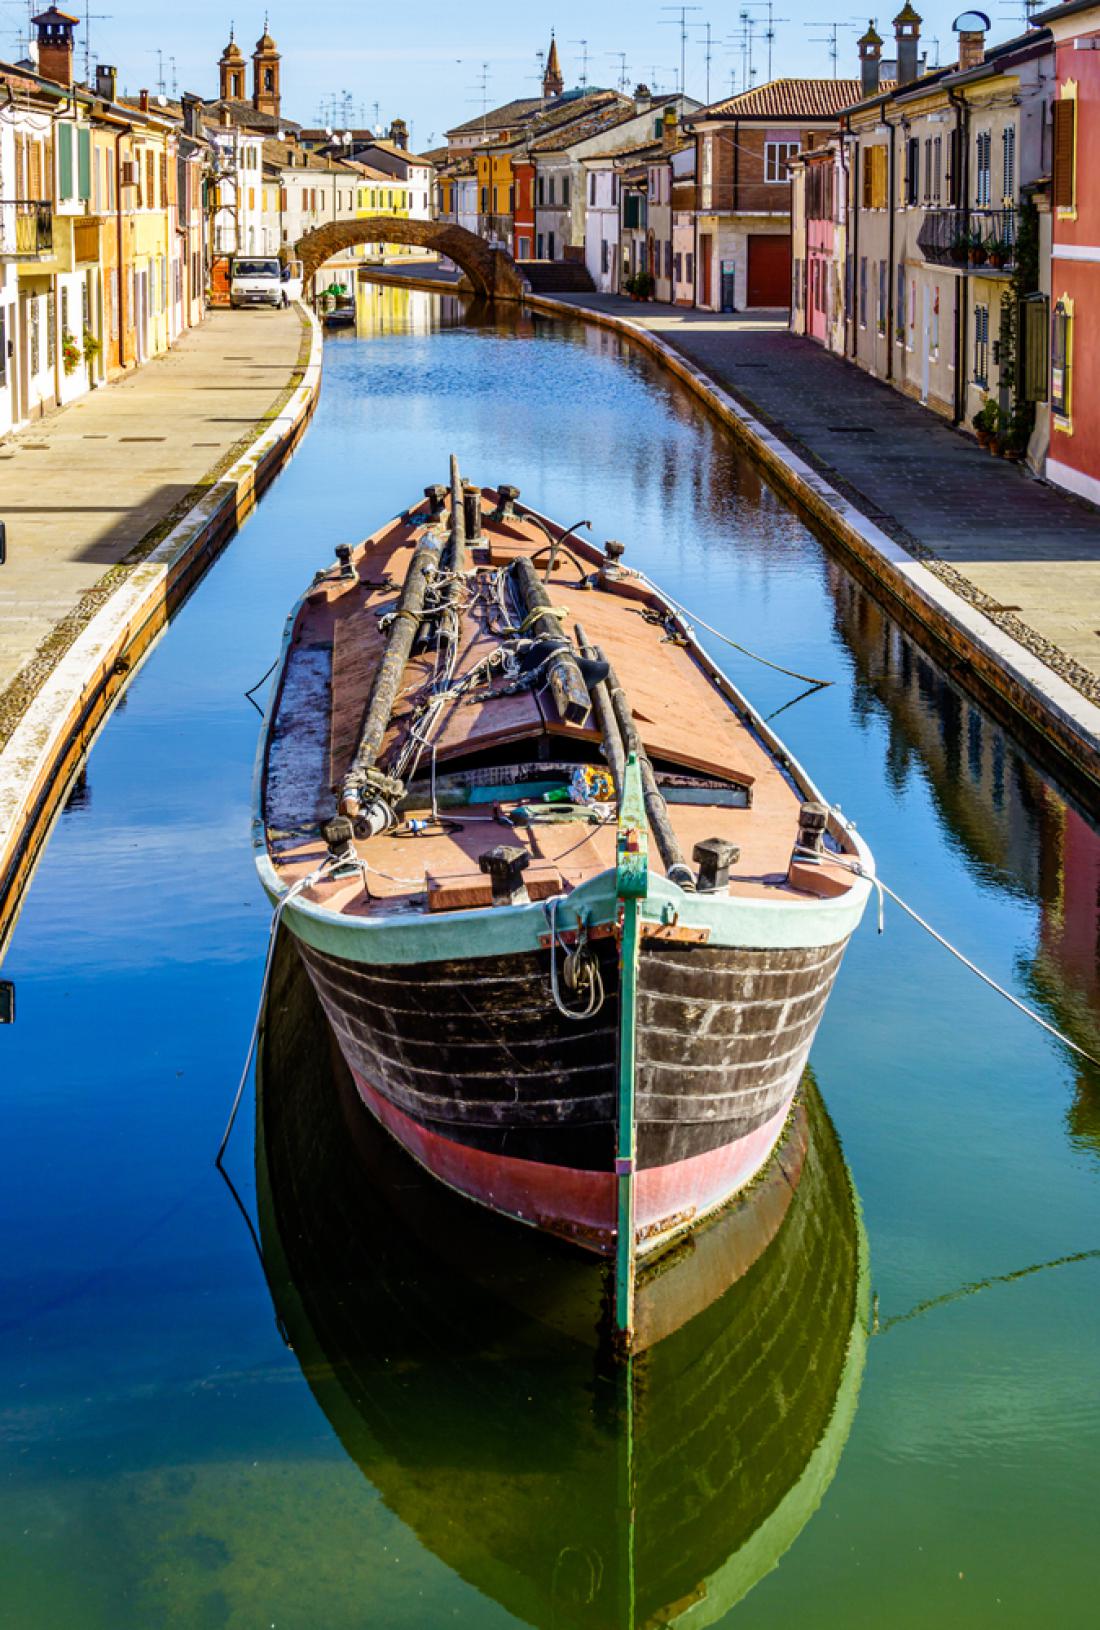 Tradicionalni leseni čolni Foto: FooTToo/Shutterstock